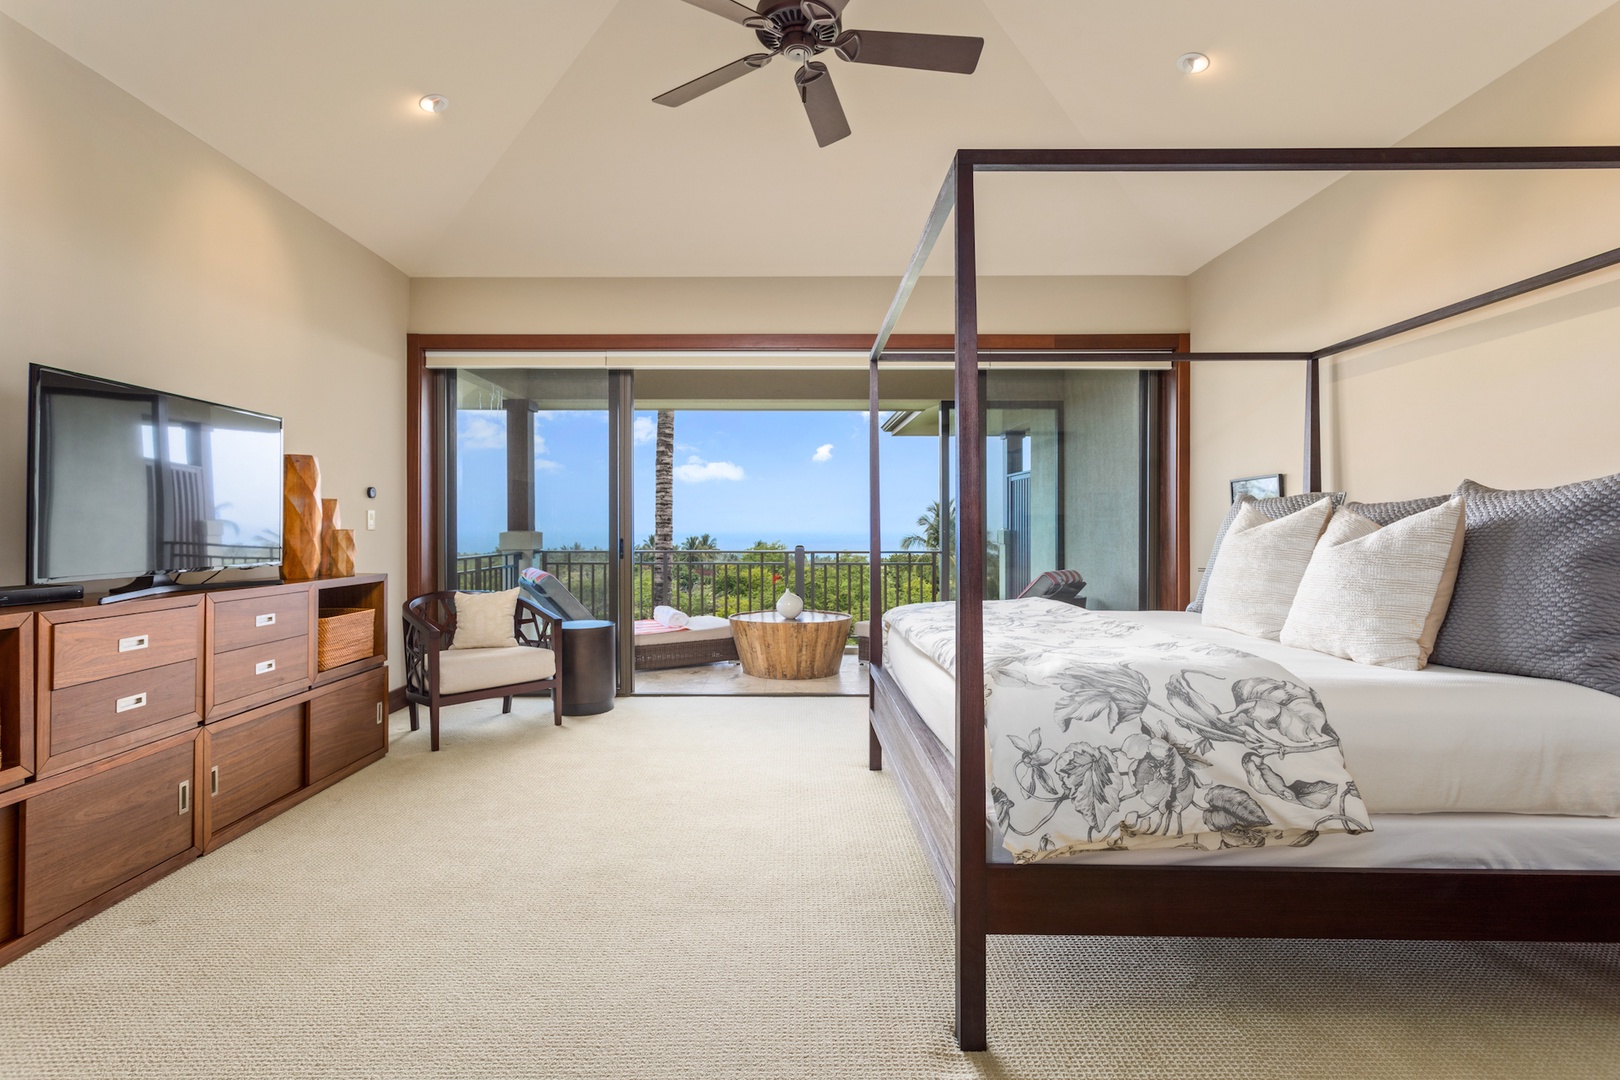 Kailua Kona Vacation Rentals, 3BD Hainoa Villa (2901D) at Four Seasons Resort at Hualalai - Alternate view of the primary bedroom.